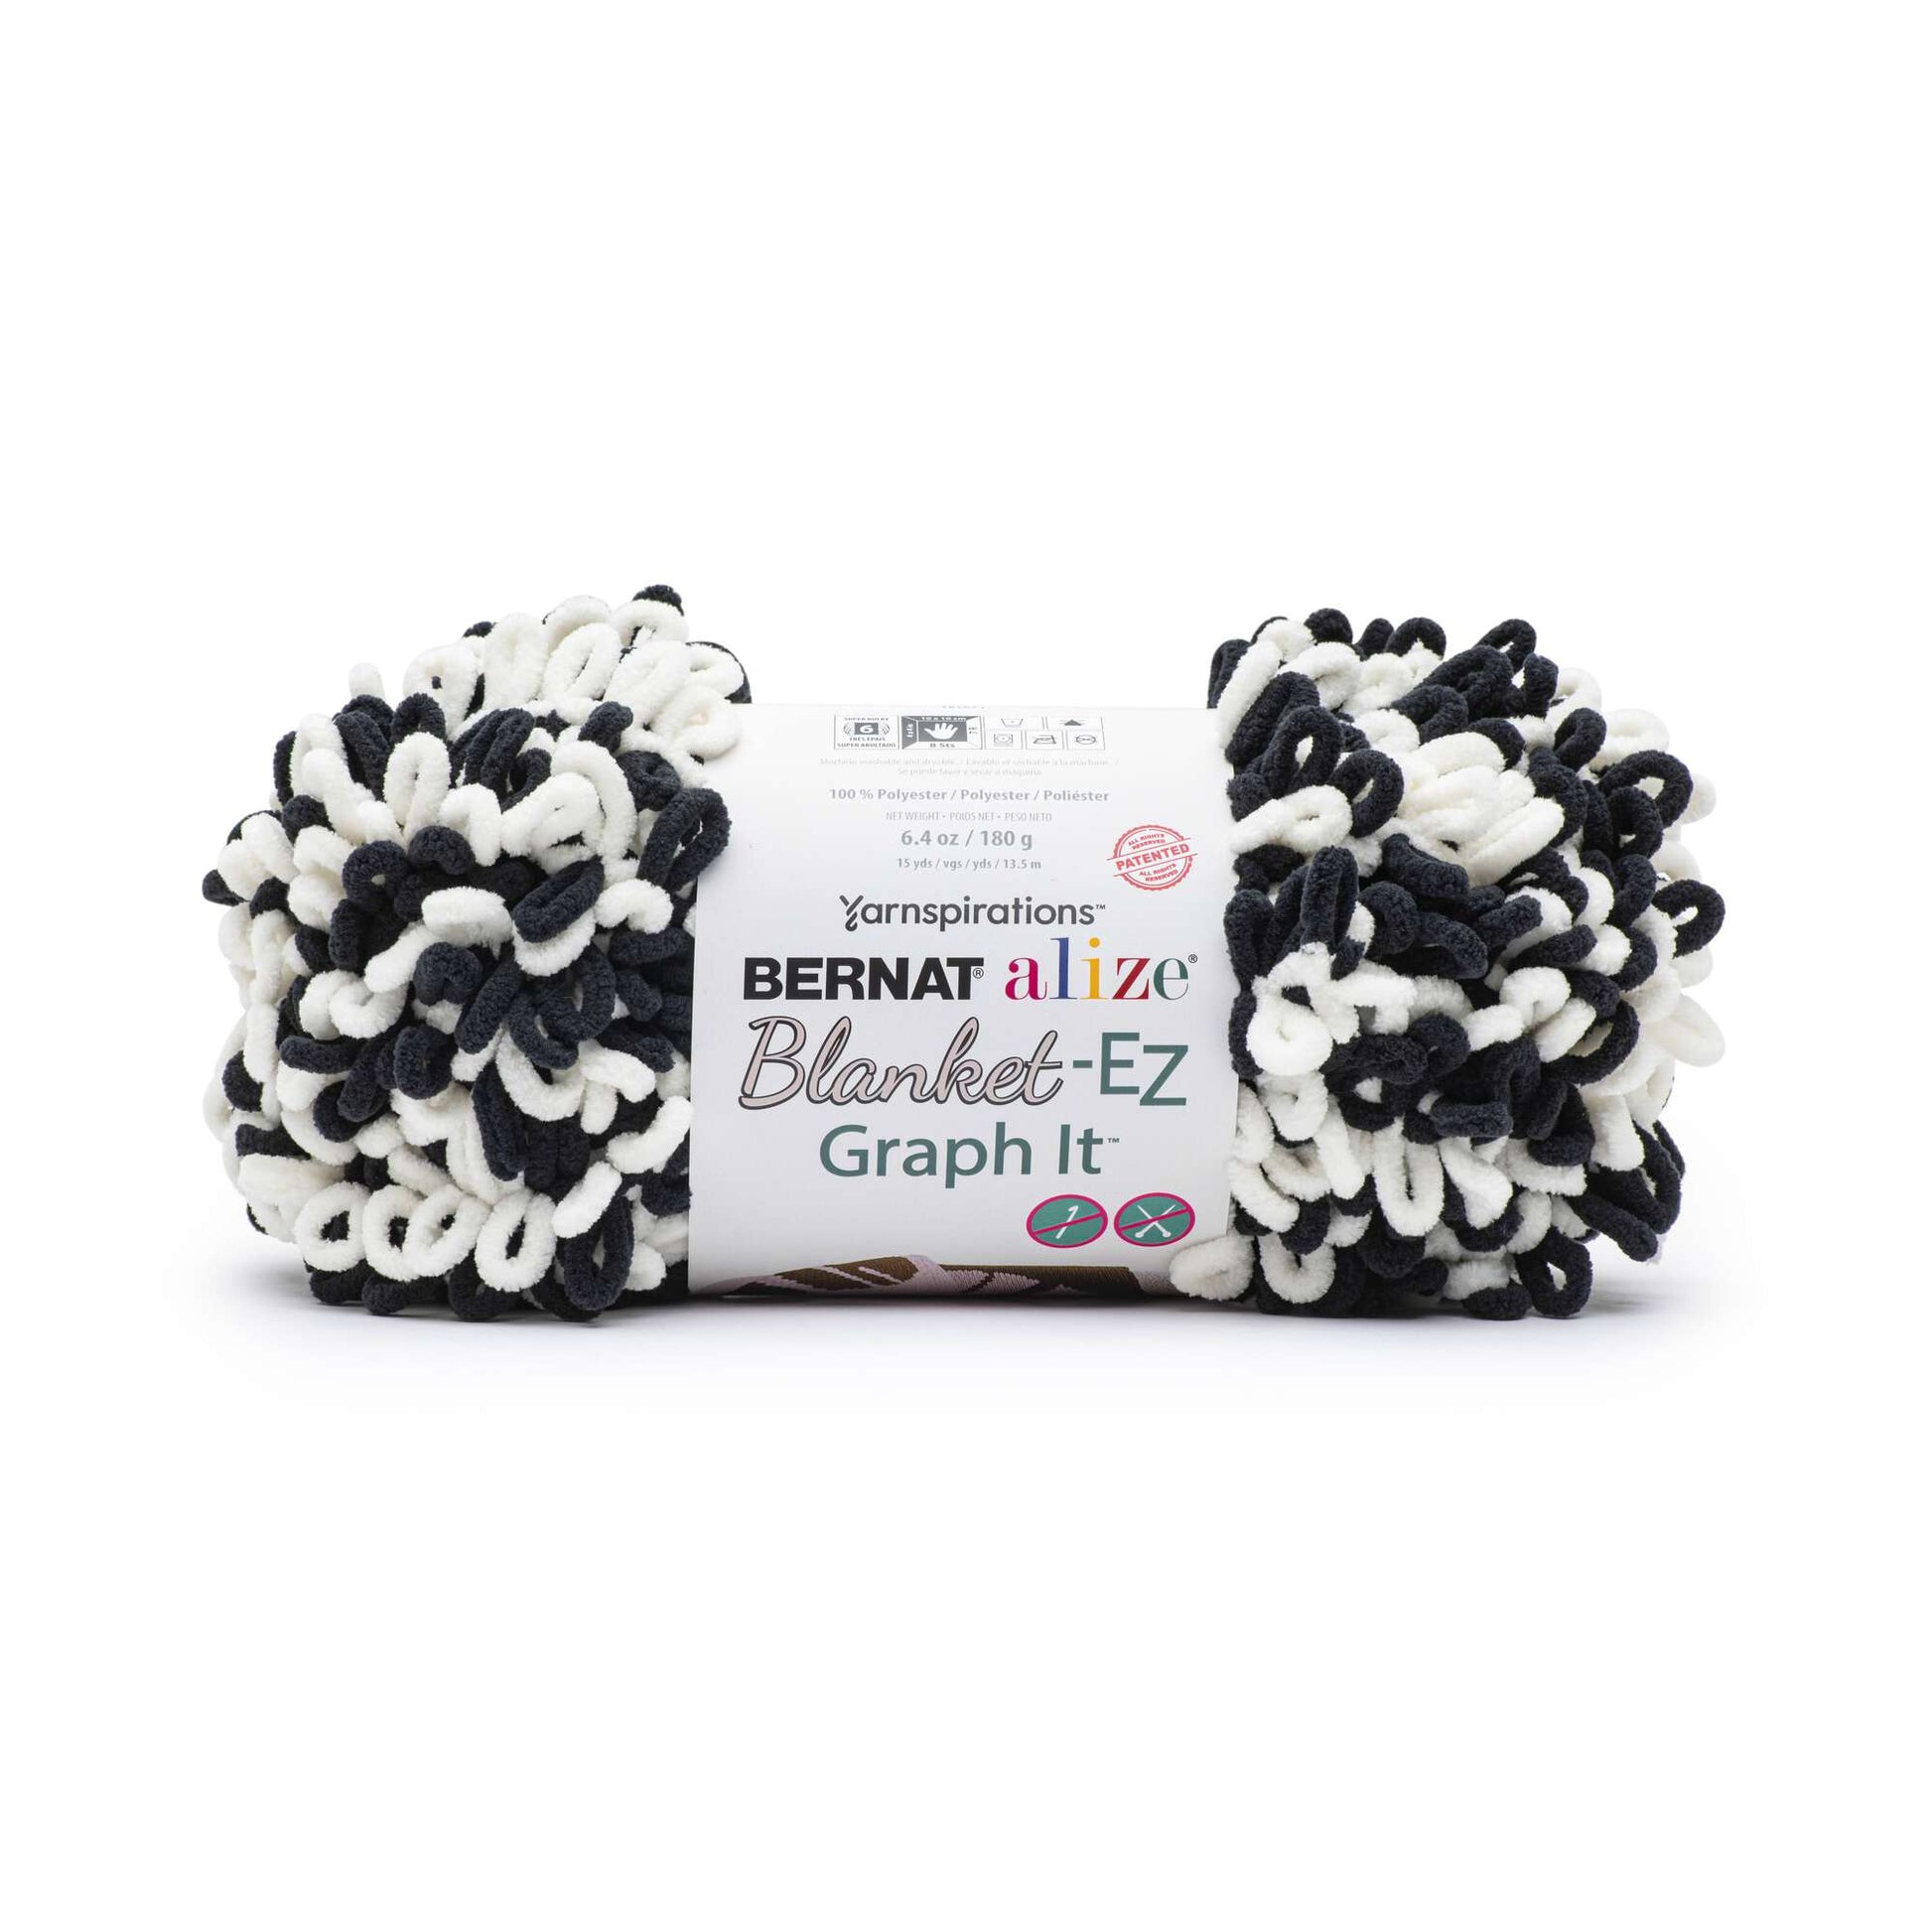 Bernat Alize Blanket-EZ Graph It Yarn - Discontinued Shades Cream Charcoal